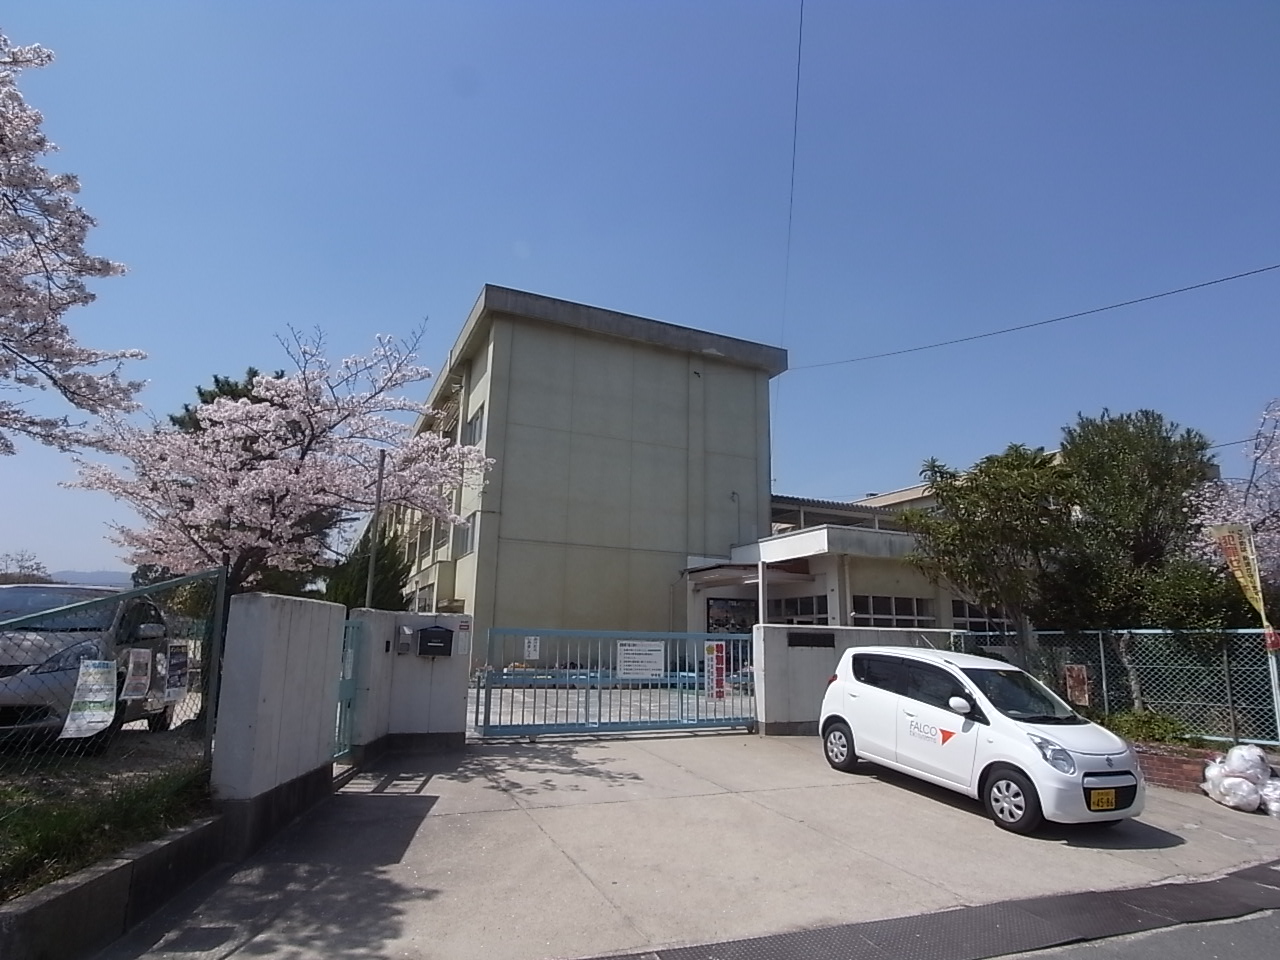 Primary school. Fushimi up to elementary school (elementary school) 312m